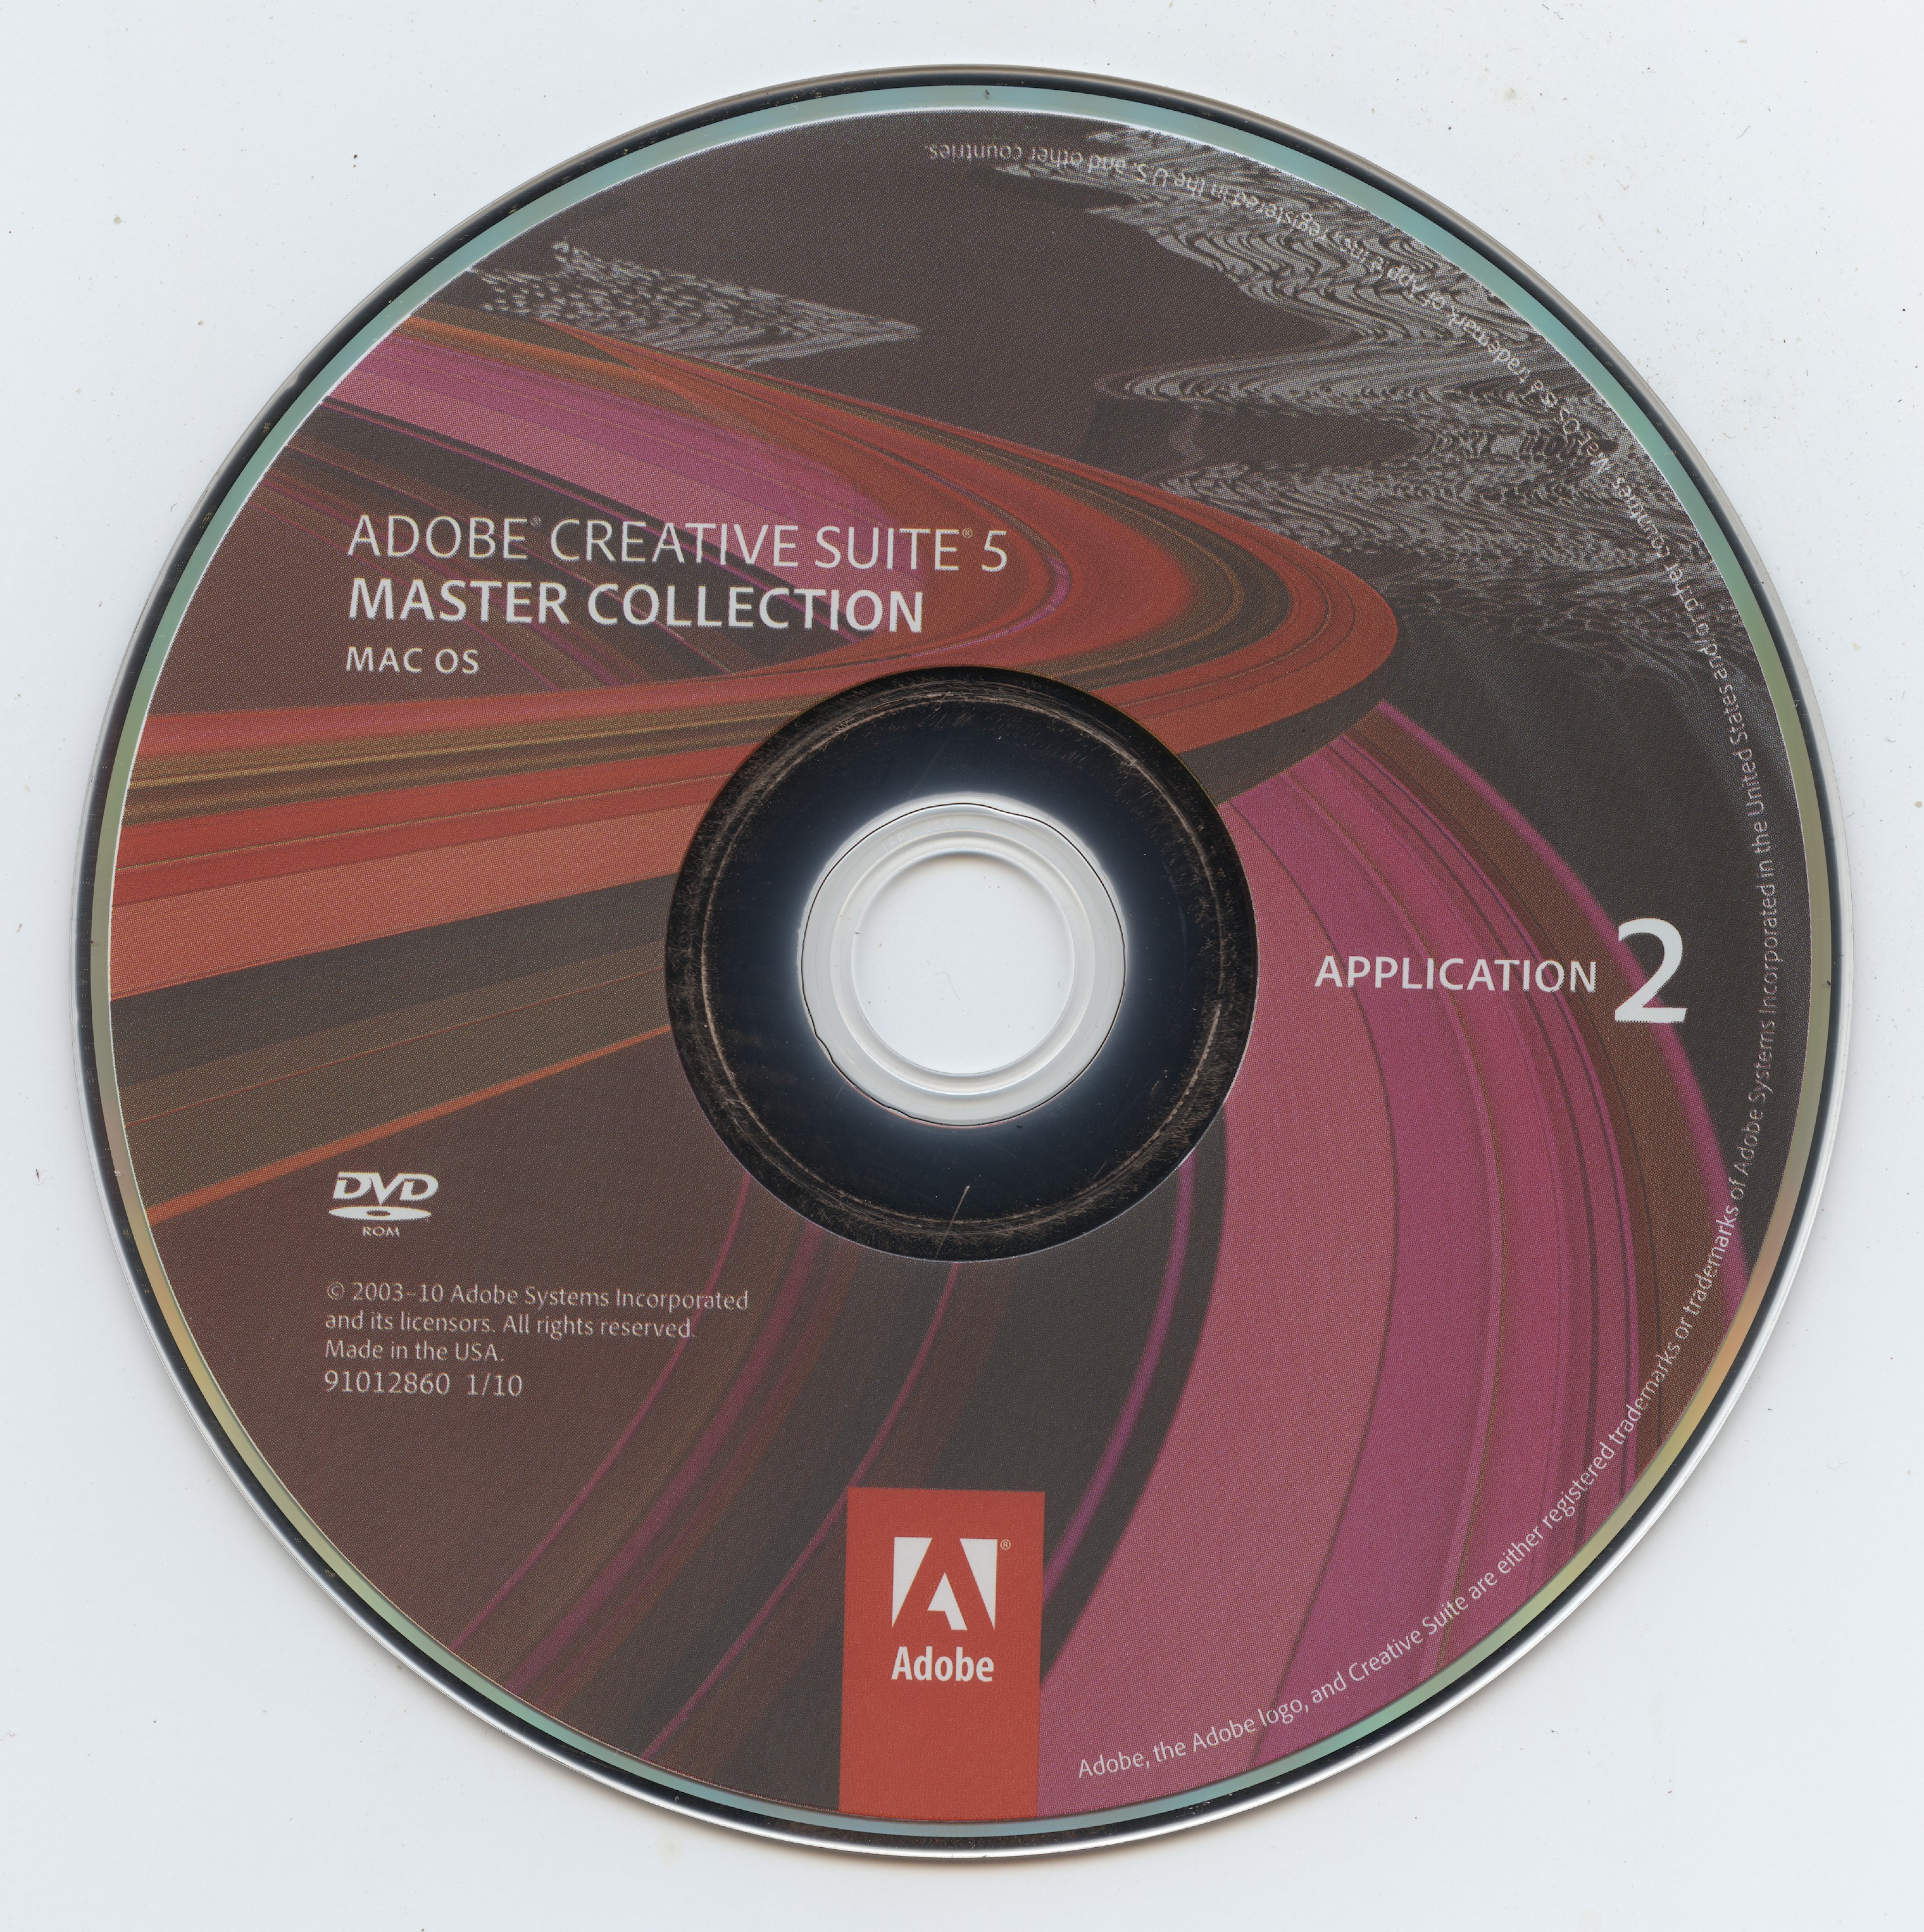 Adobe Creative Suite 5 Master Collection Mac OS (Application 2 